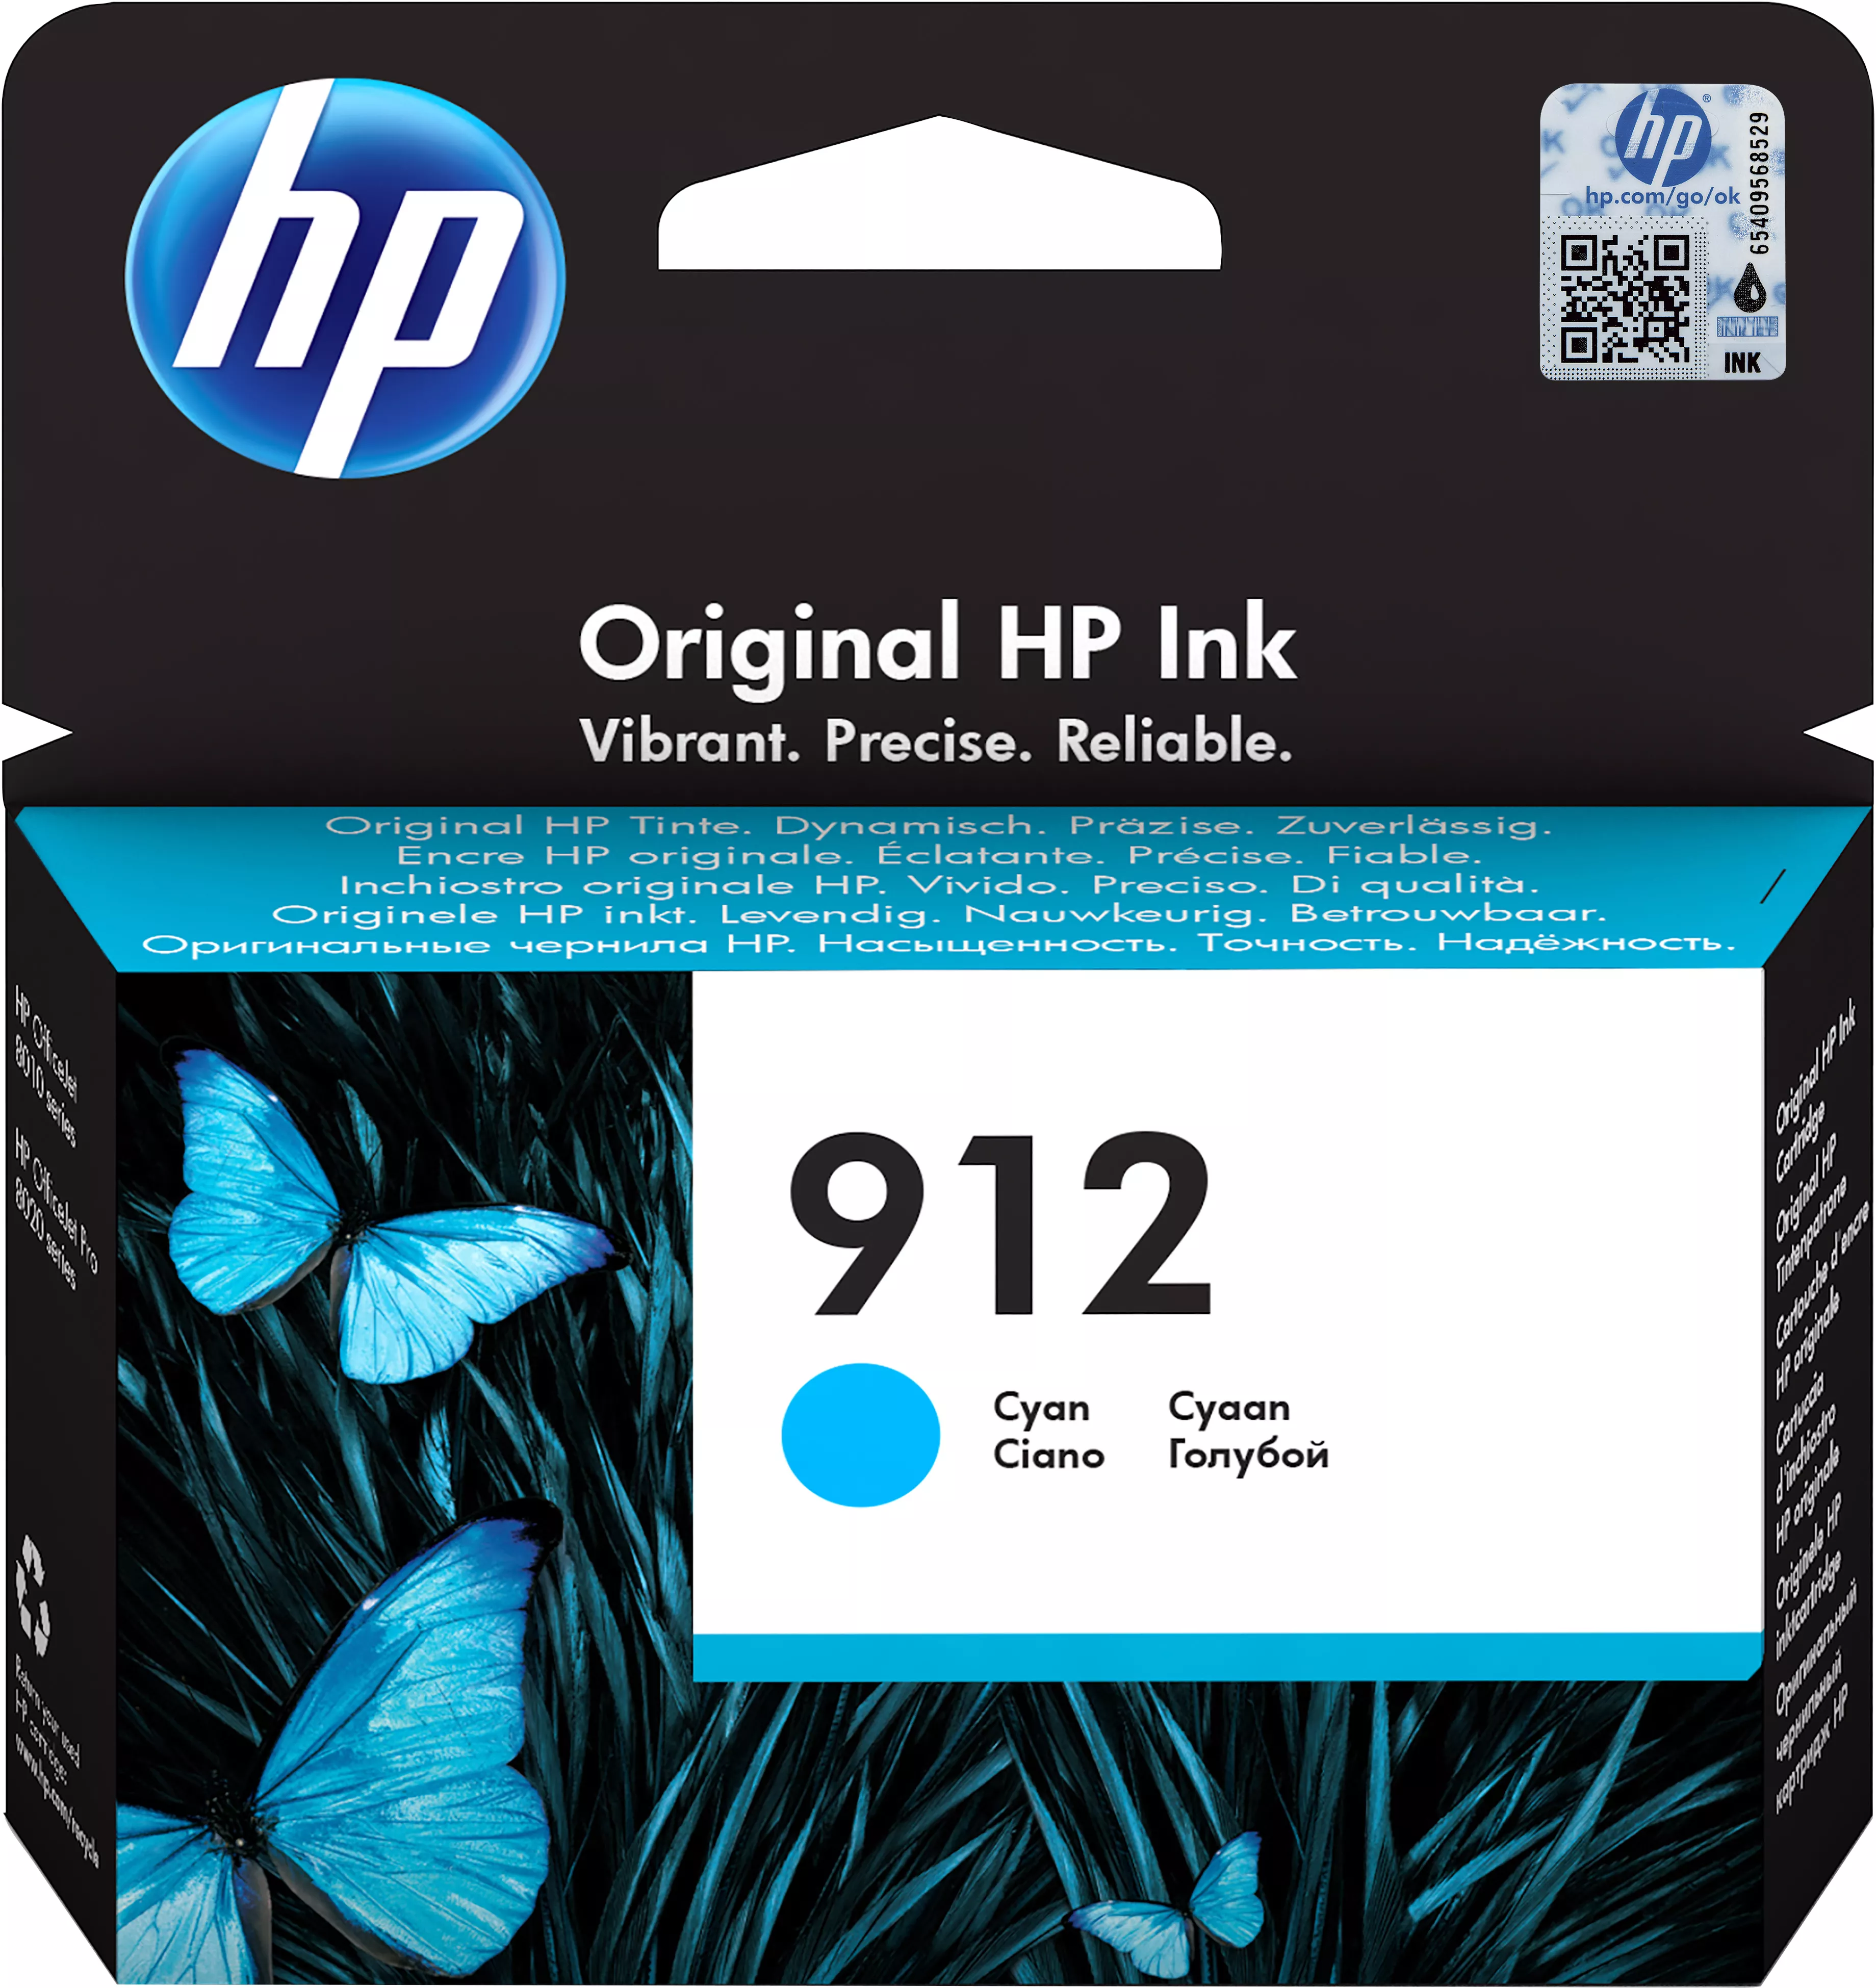 Achat HP 912 Cyan Ink Cartridge au meilleur prix